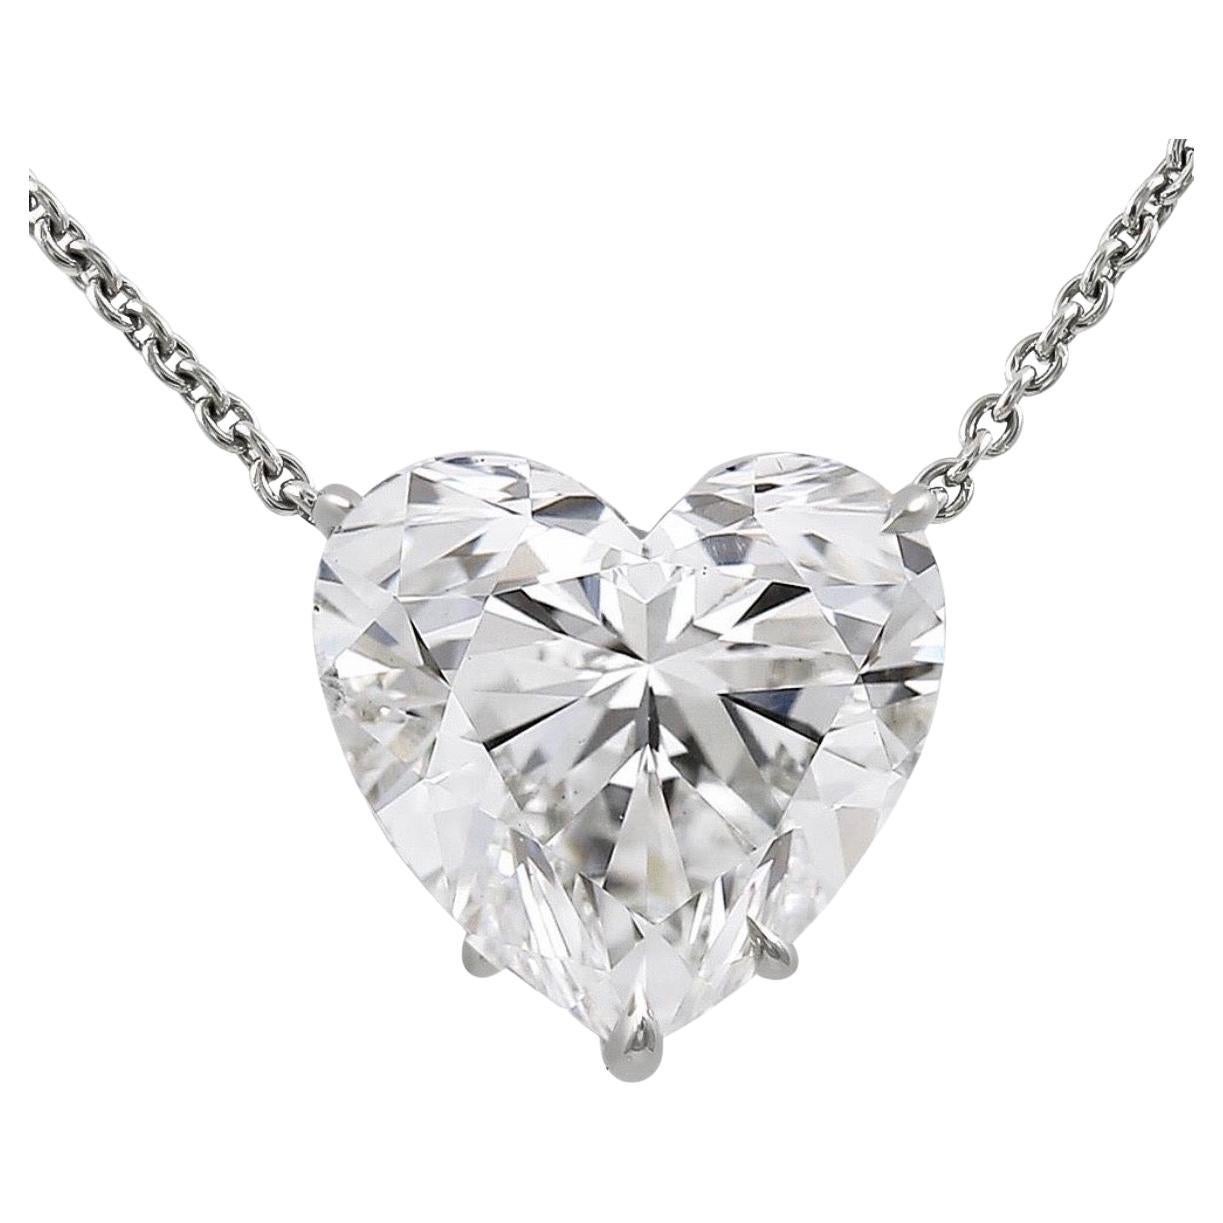 Issac Nussbaum GIA Certified 10.76 Carat Heart Shape Diamond Pendant Necklace